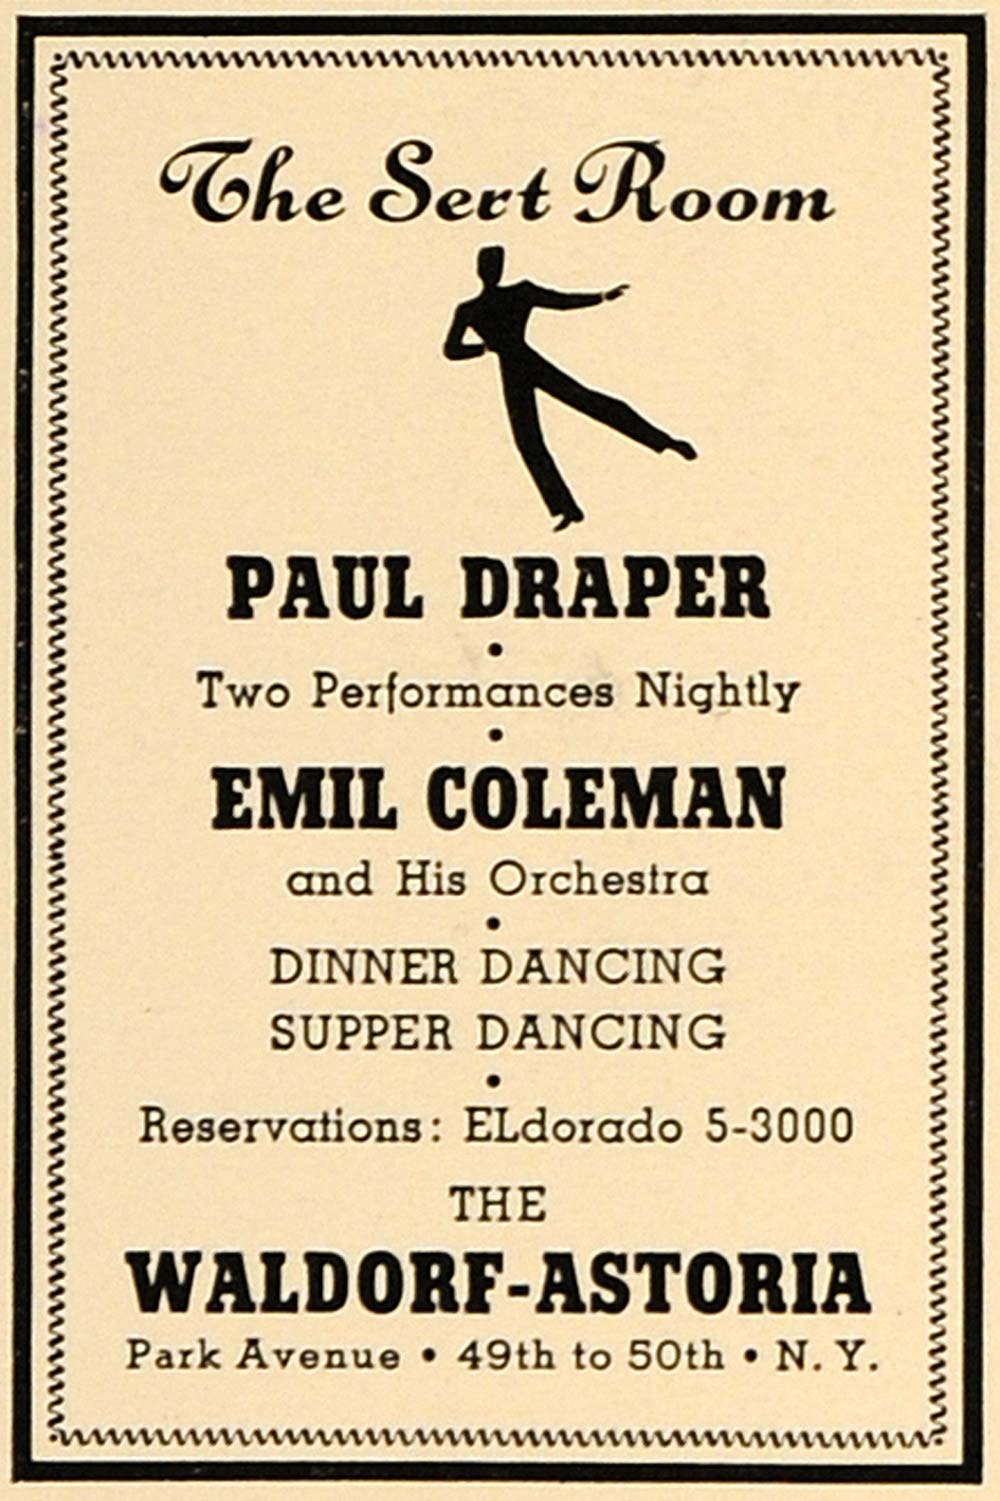 1938 Ad Waldorf-Astoria Hotel Paul Draper Emil Coleman - ORIGINAL ESQ1